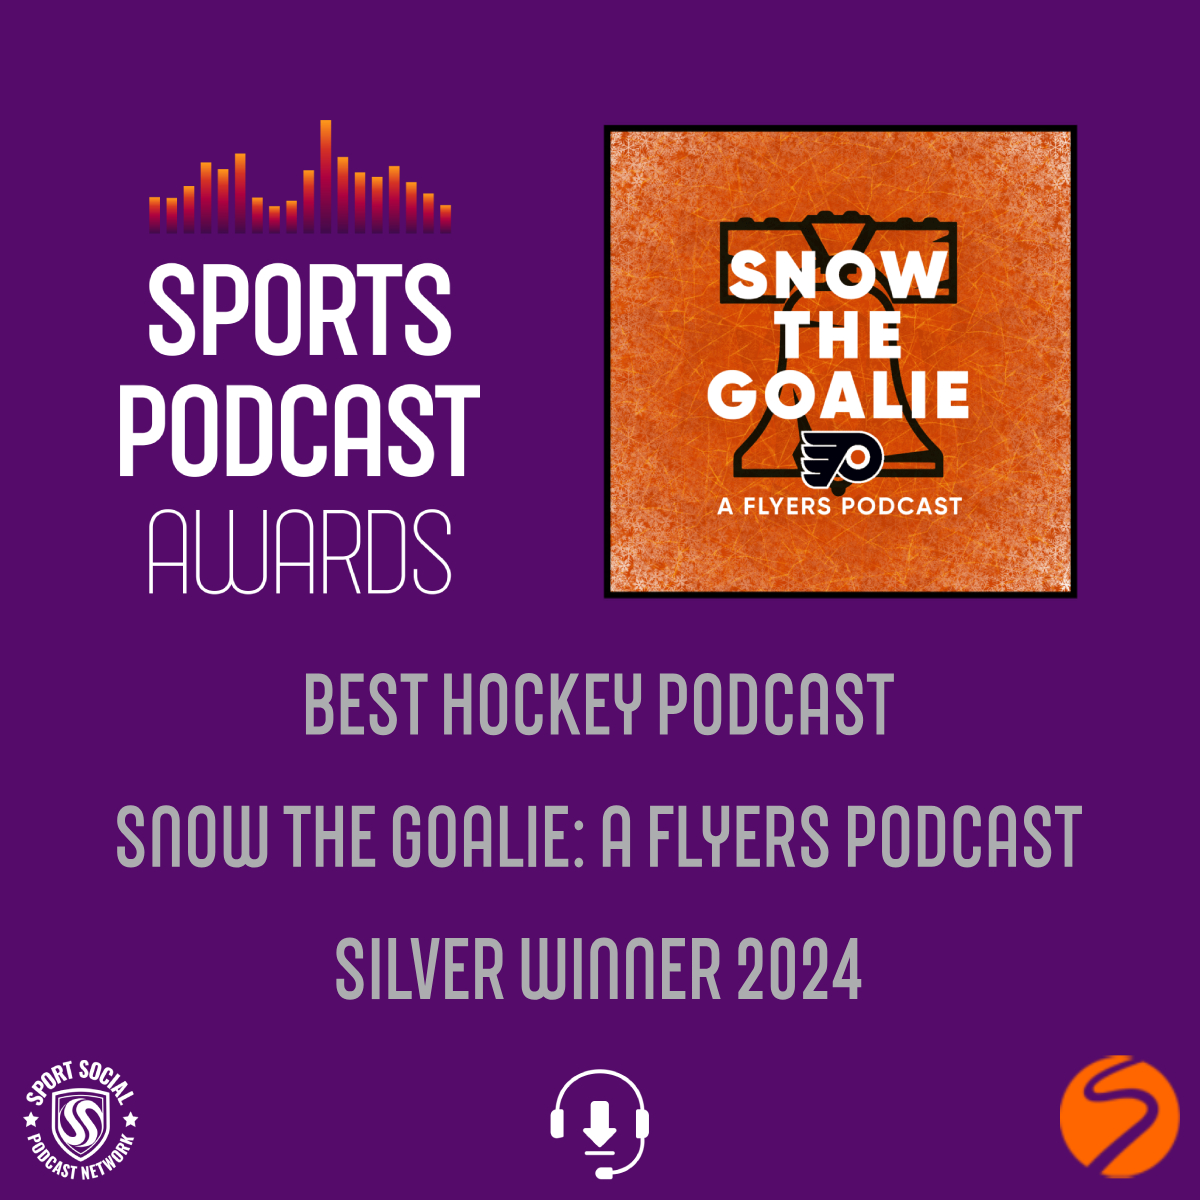 🥈🏒 The Best Hockey Podcast Silver Award goes to… Snow The Goalie: A Flyers Podcast @SnowTheGoalie 🏆👏